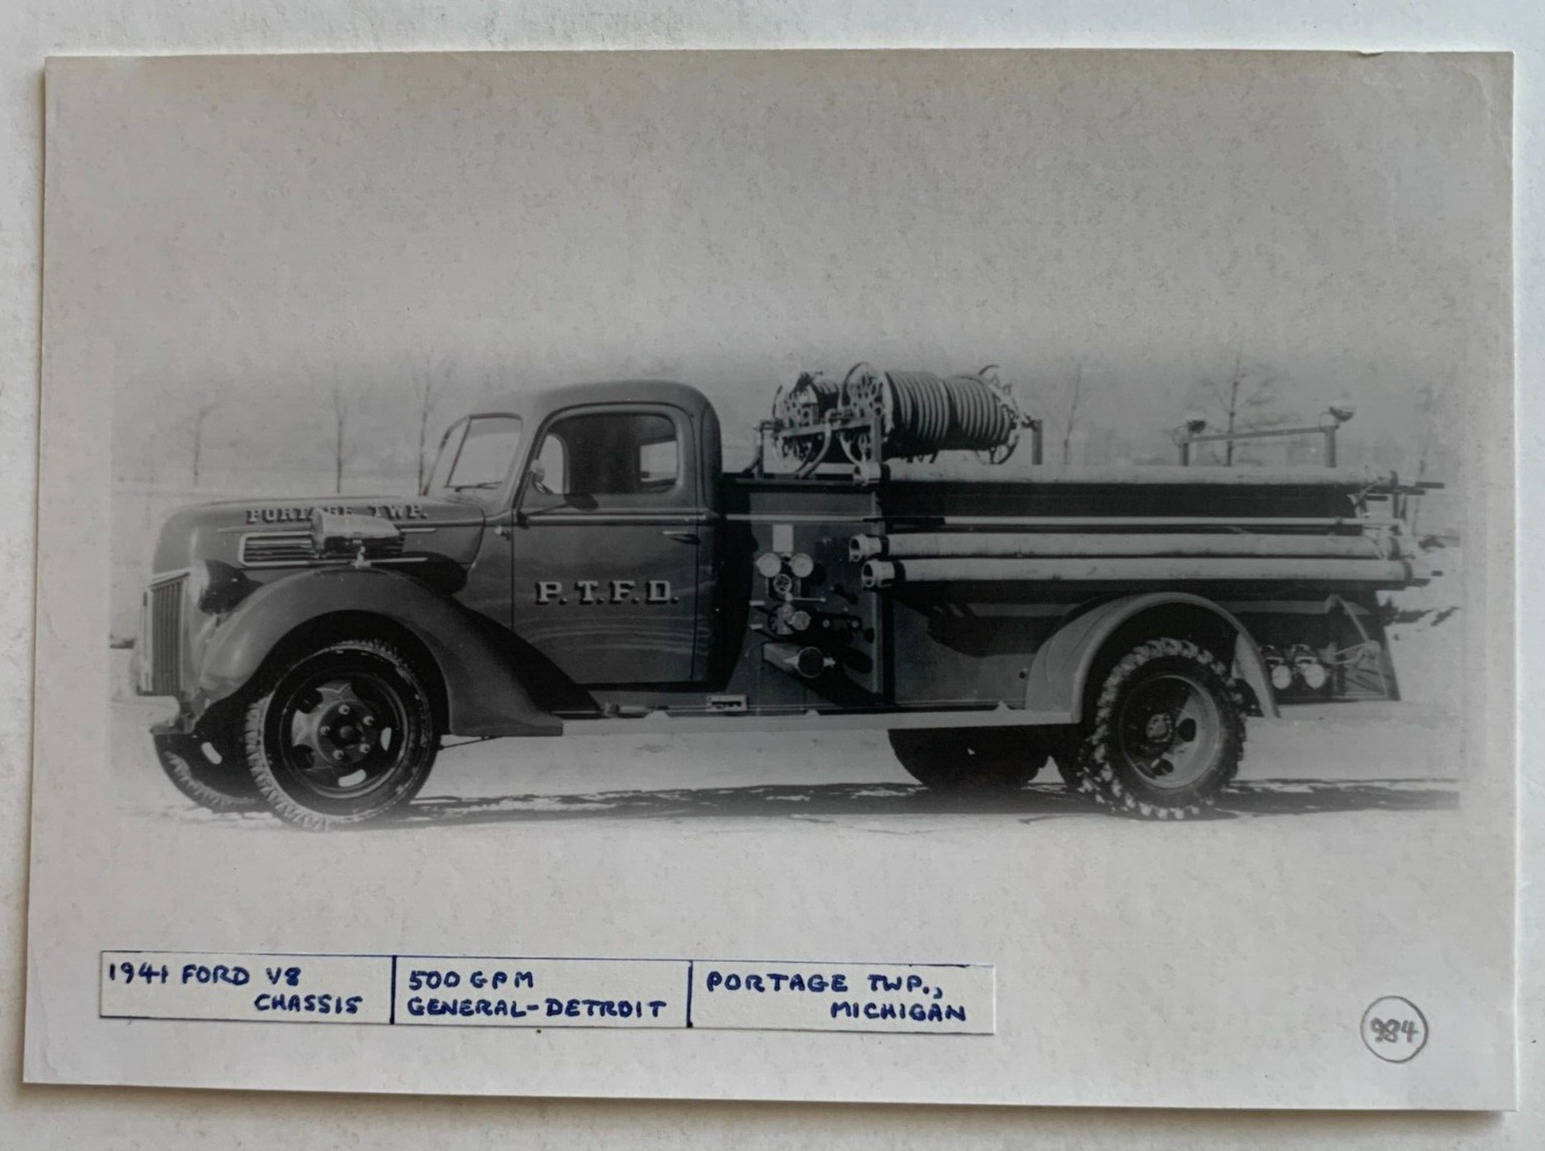 Vintage Fire Engine Truck 3x5 B&W Photo Portage Twp Michigan FD General Detroit